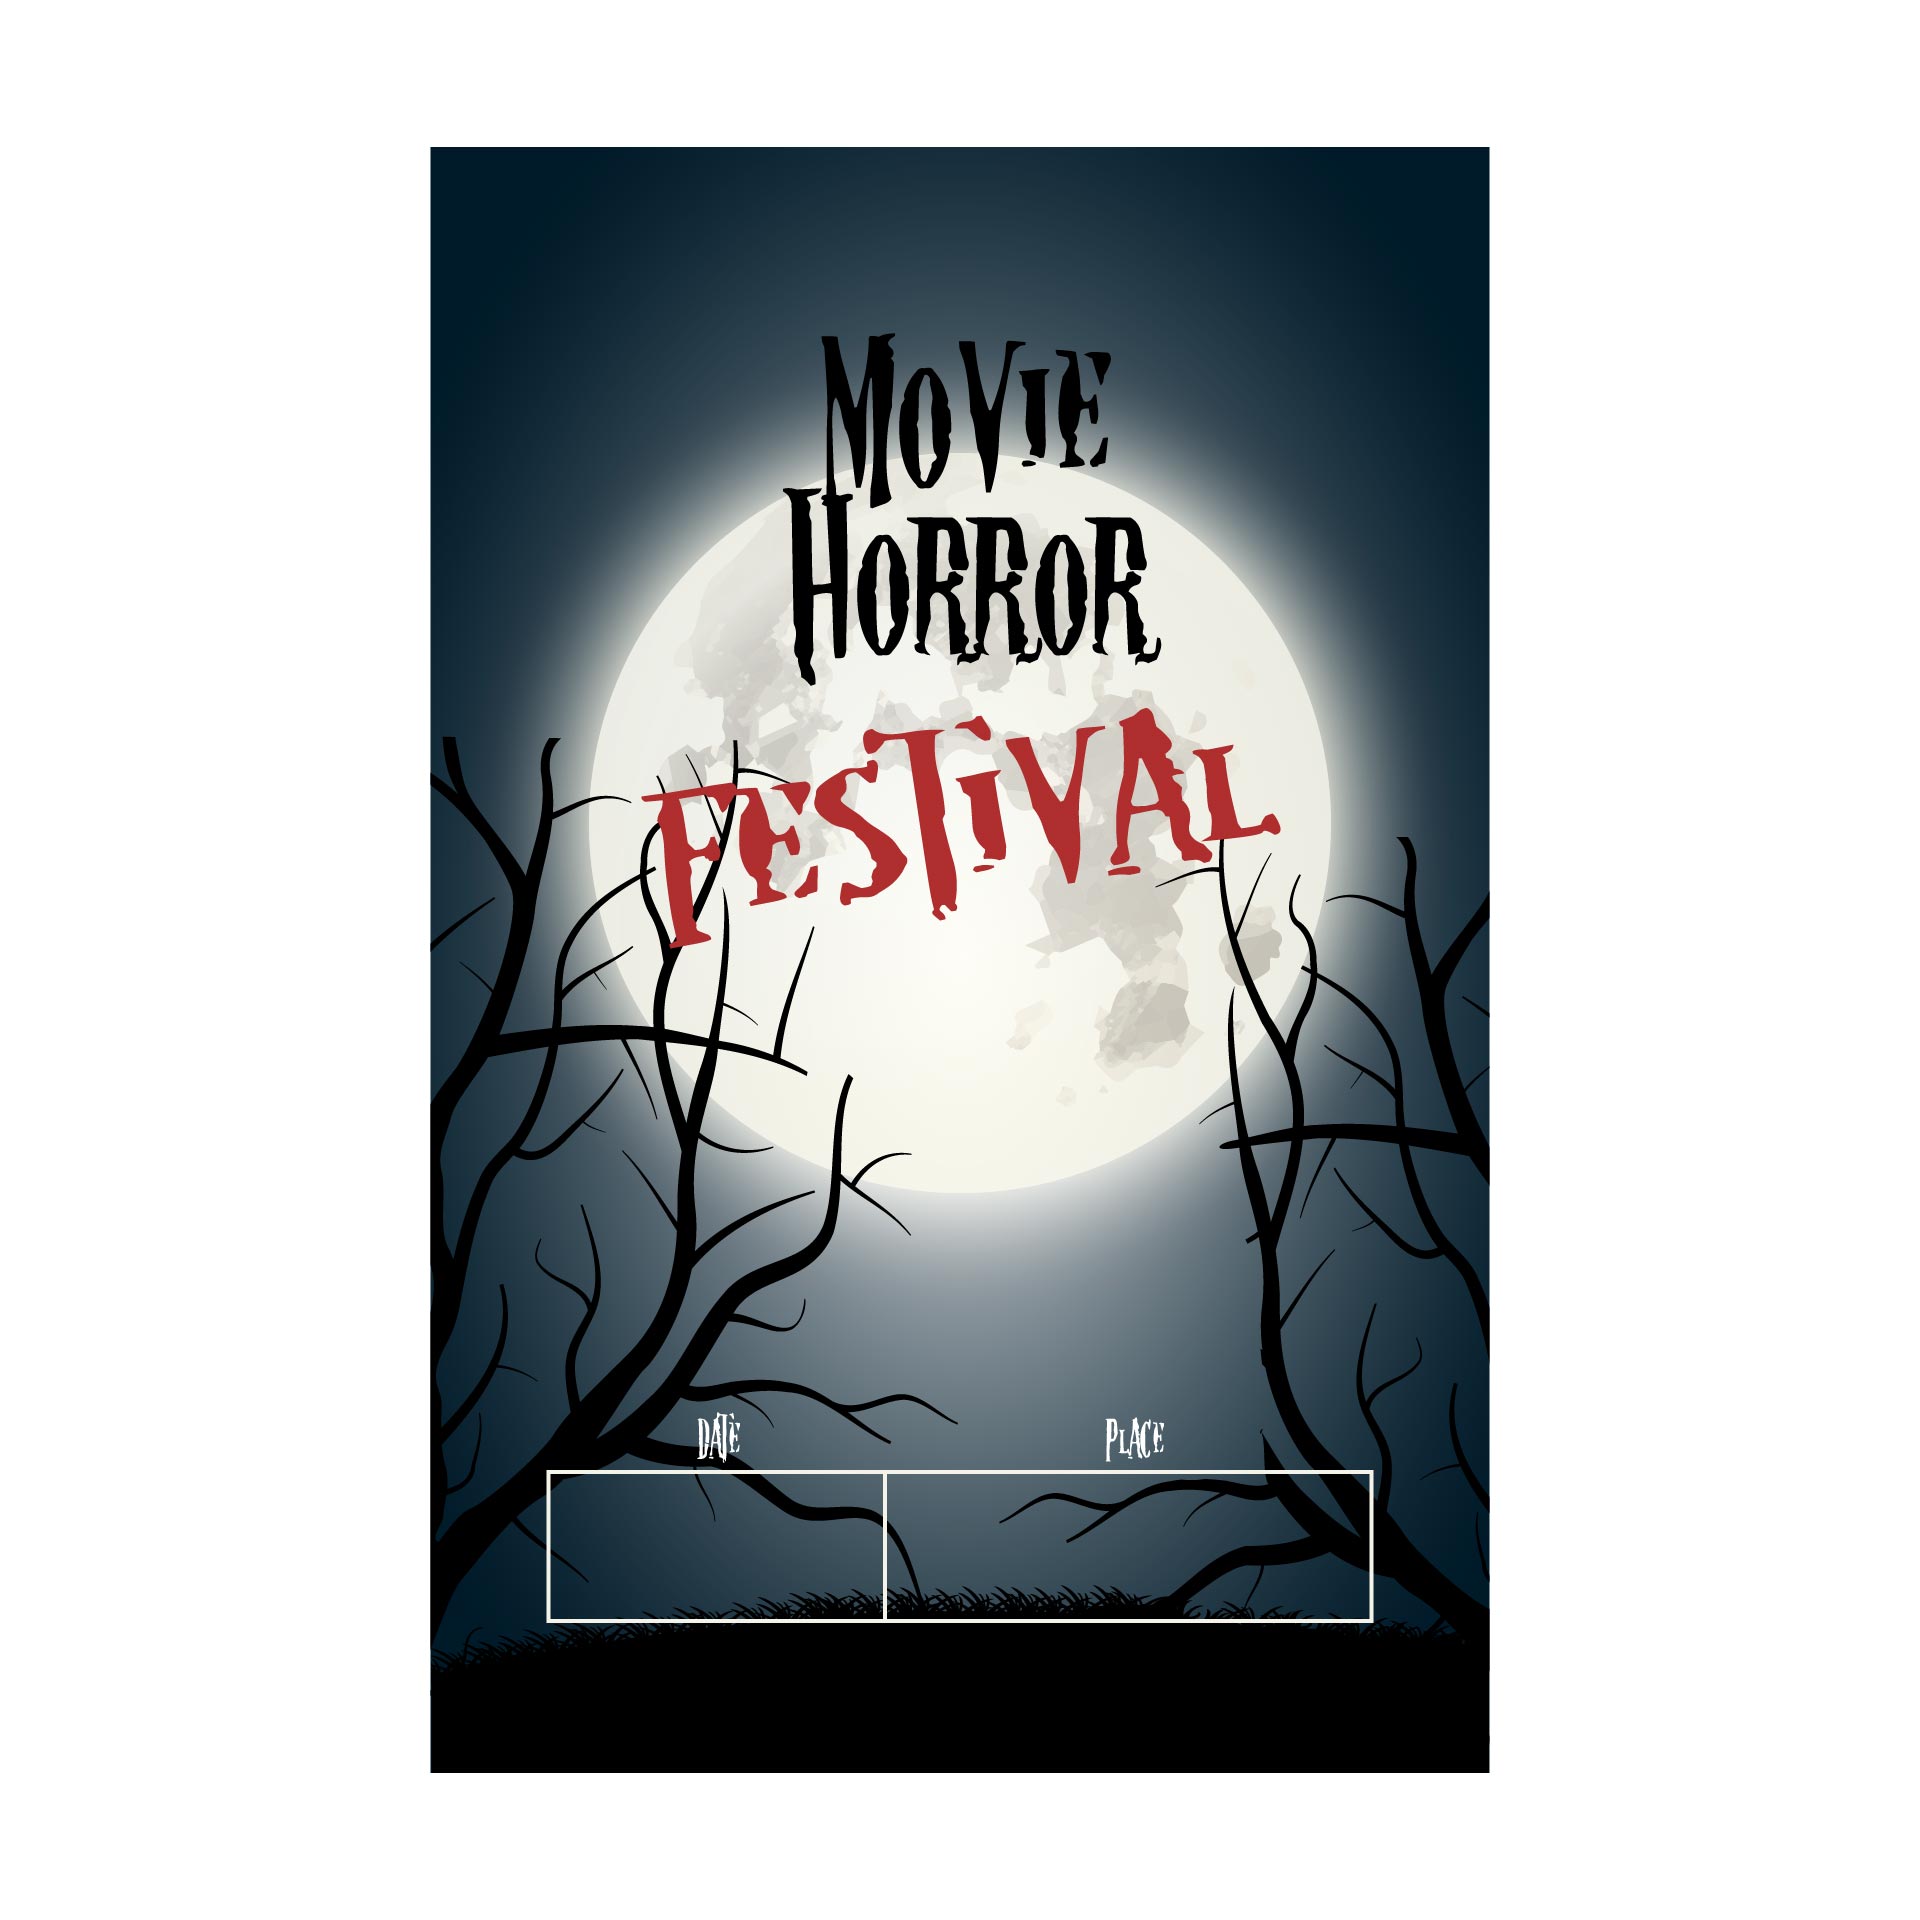 Printable Vector Poster For Horror Film Night